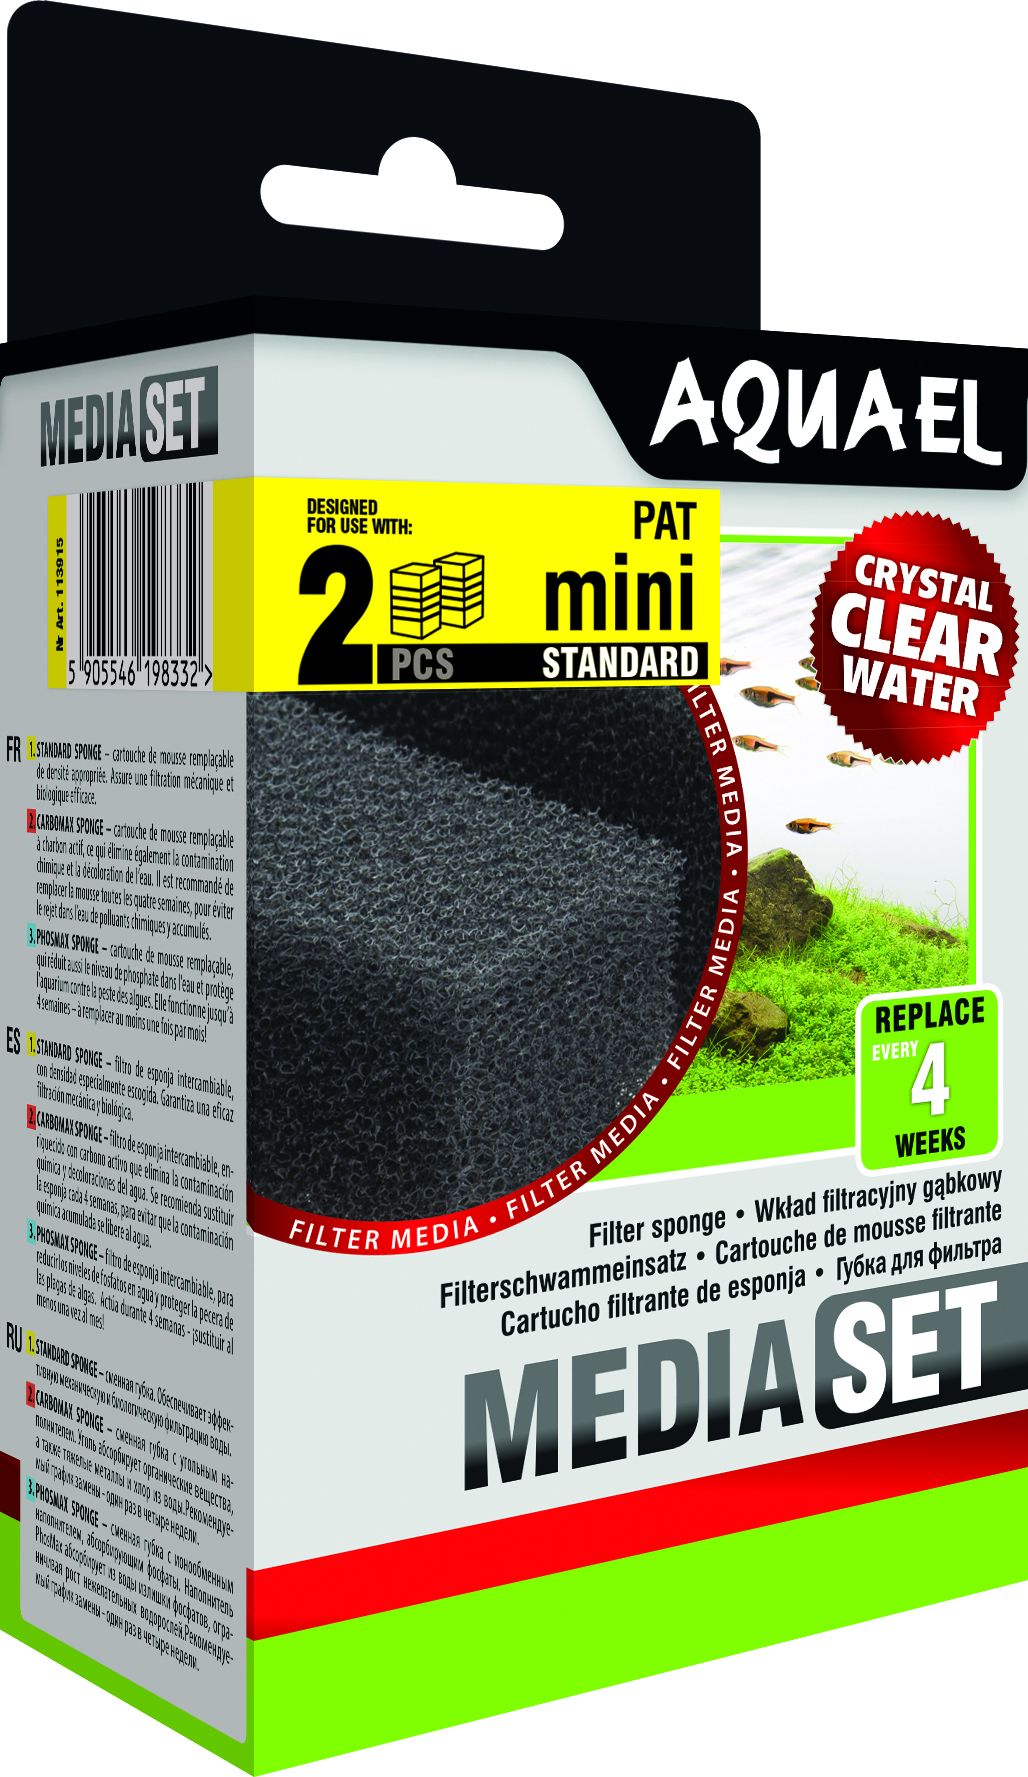 AQUAEL Sponge insert for Pat filter - Mini 2 pcs. (113915) akvārija filtrs